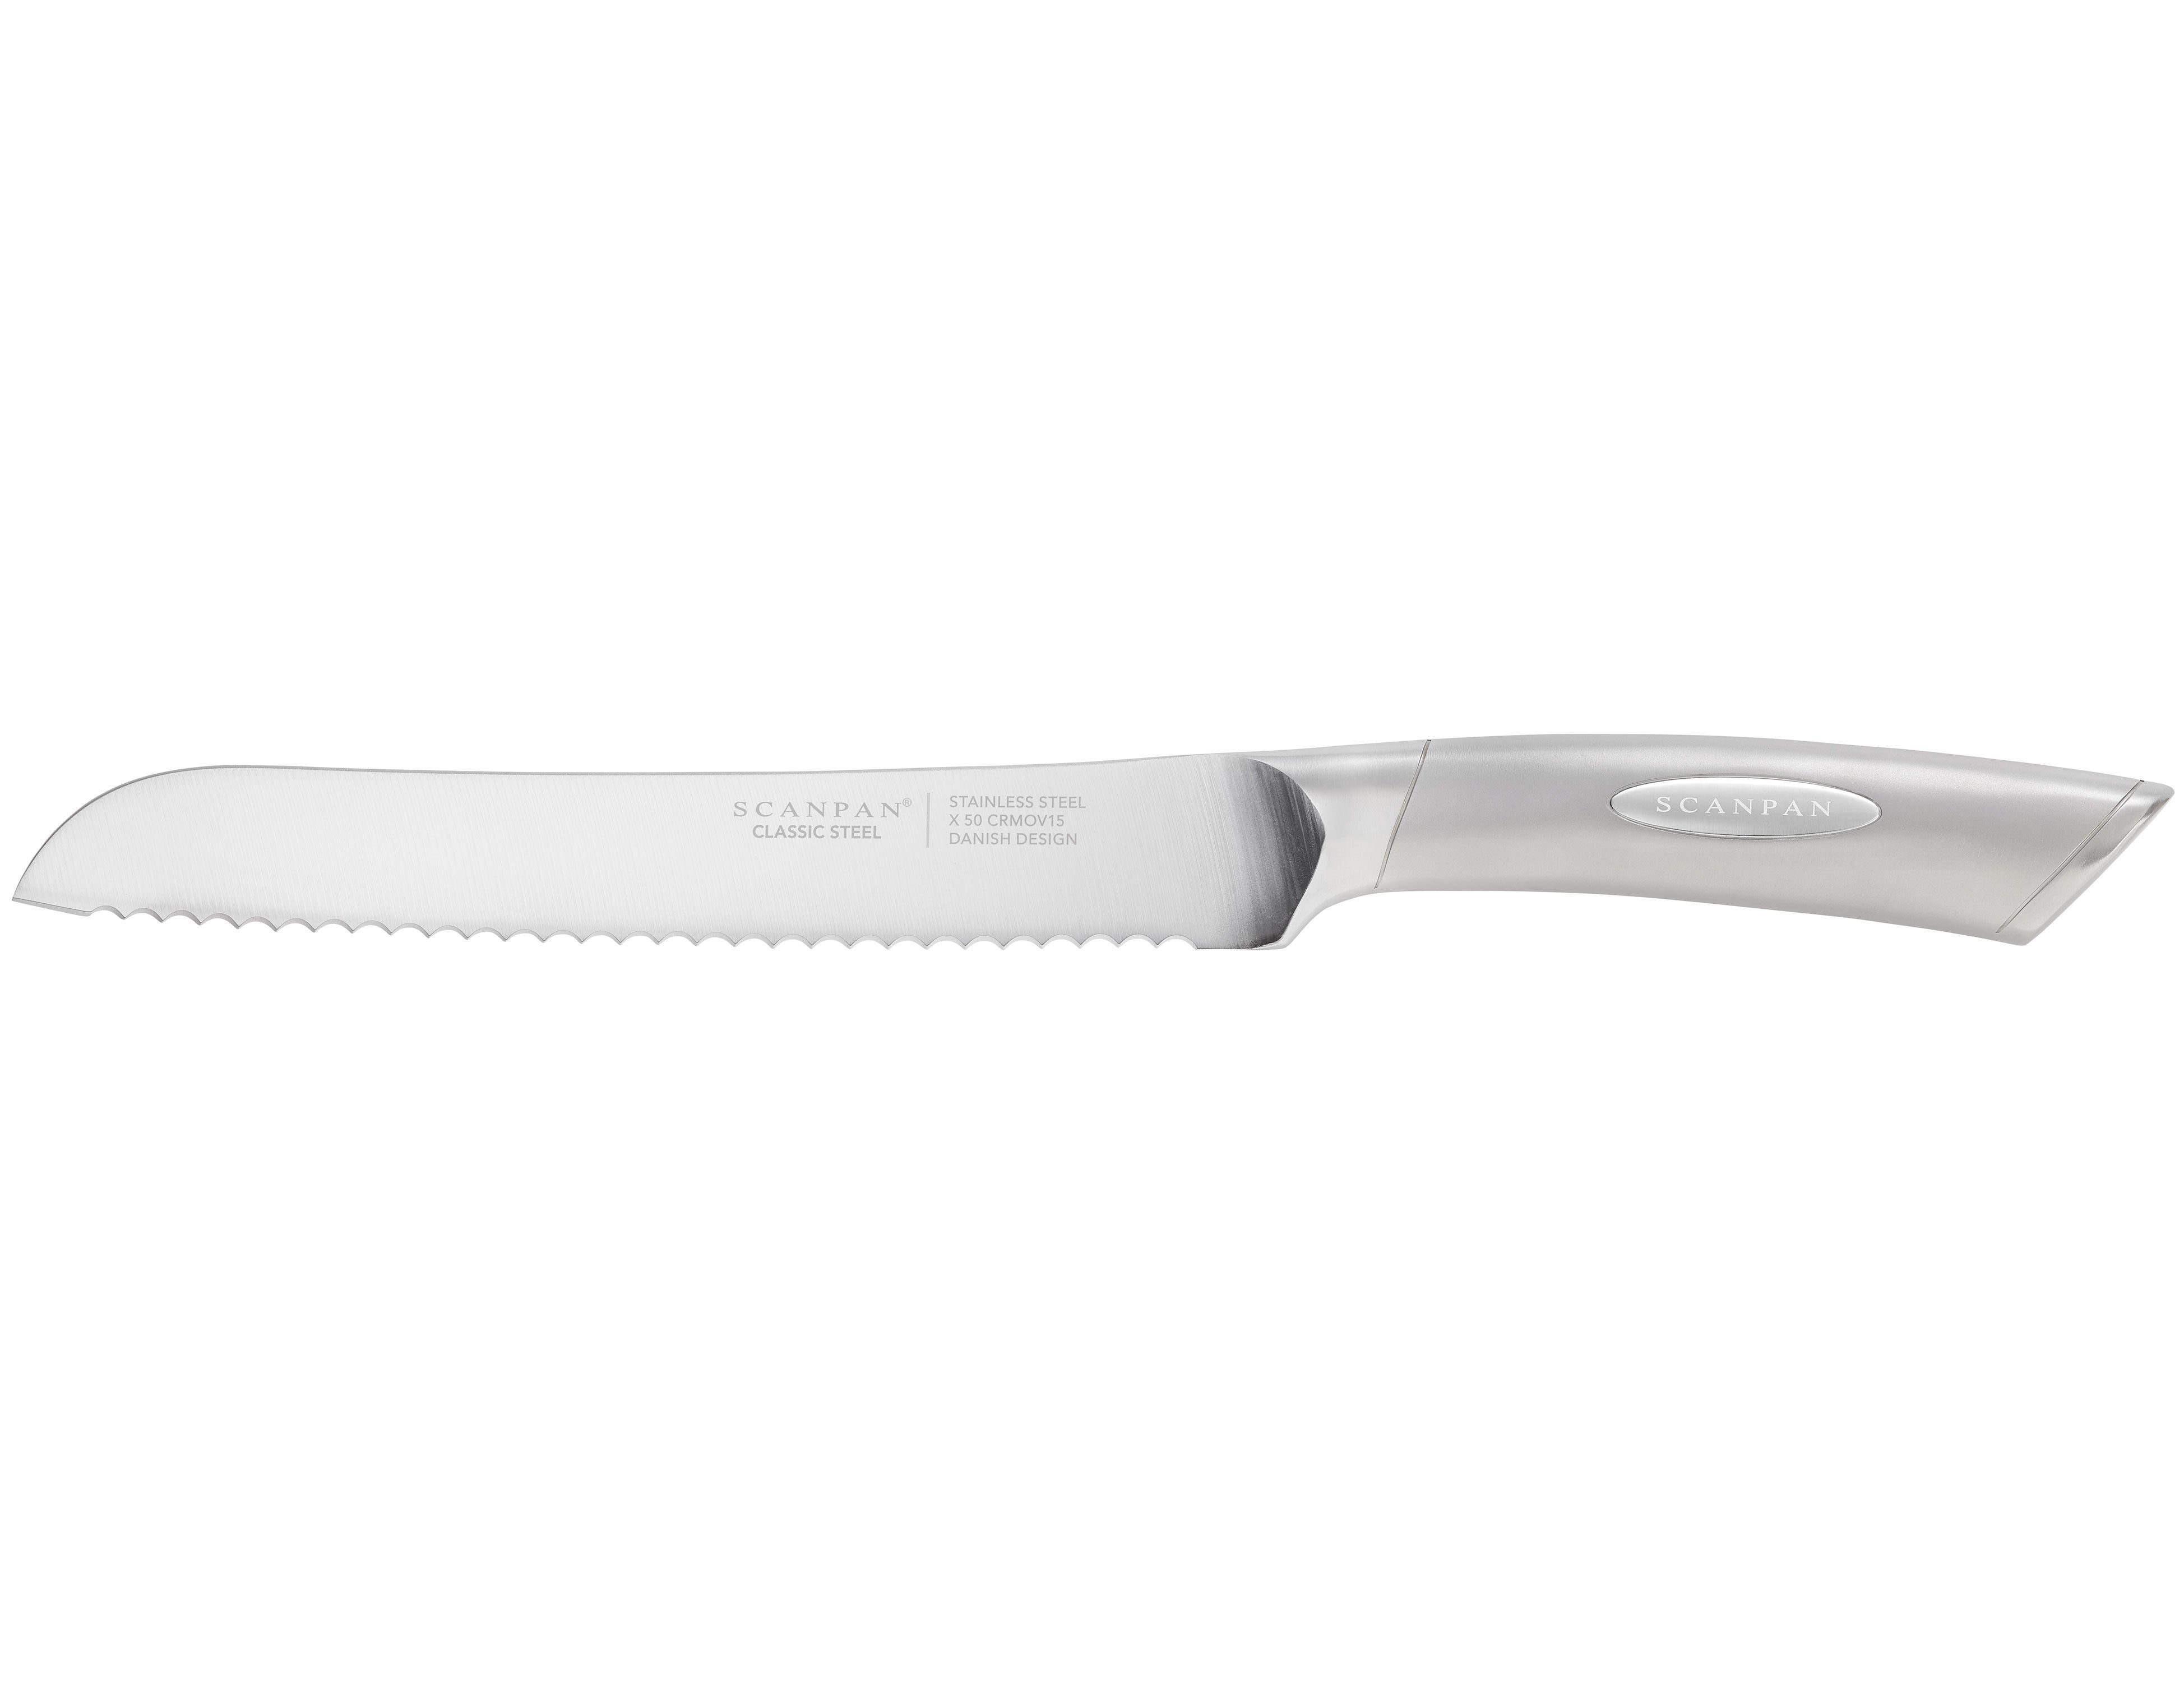 Scanpan Classic Steel 7pc Knife Block Set - SP9001030700 - The Cotswold Knife Company